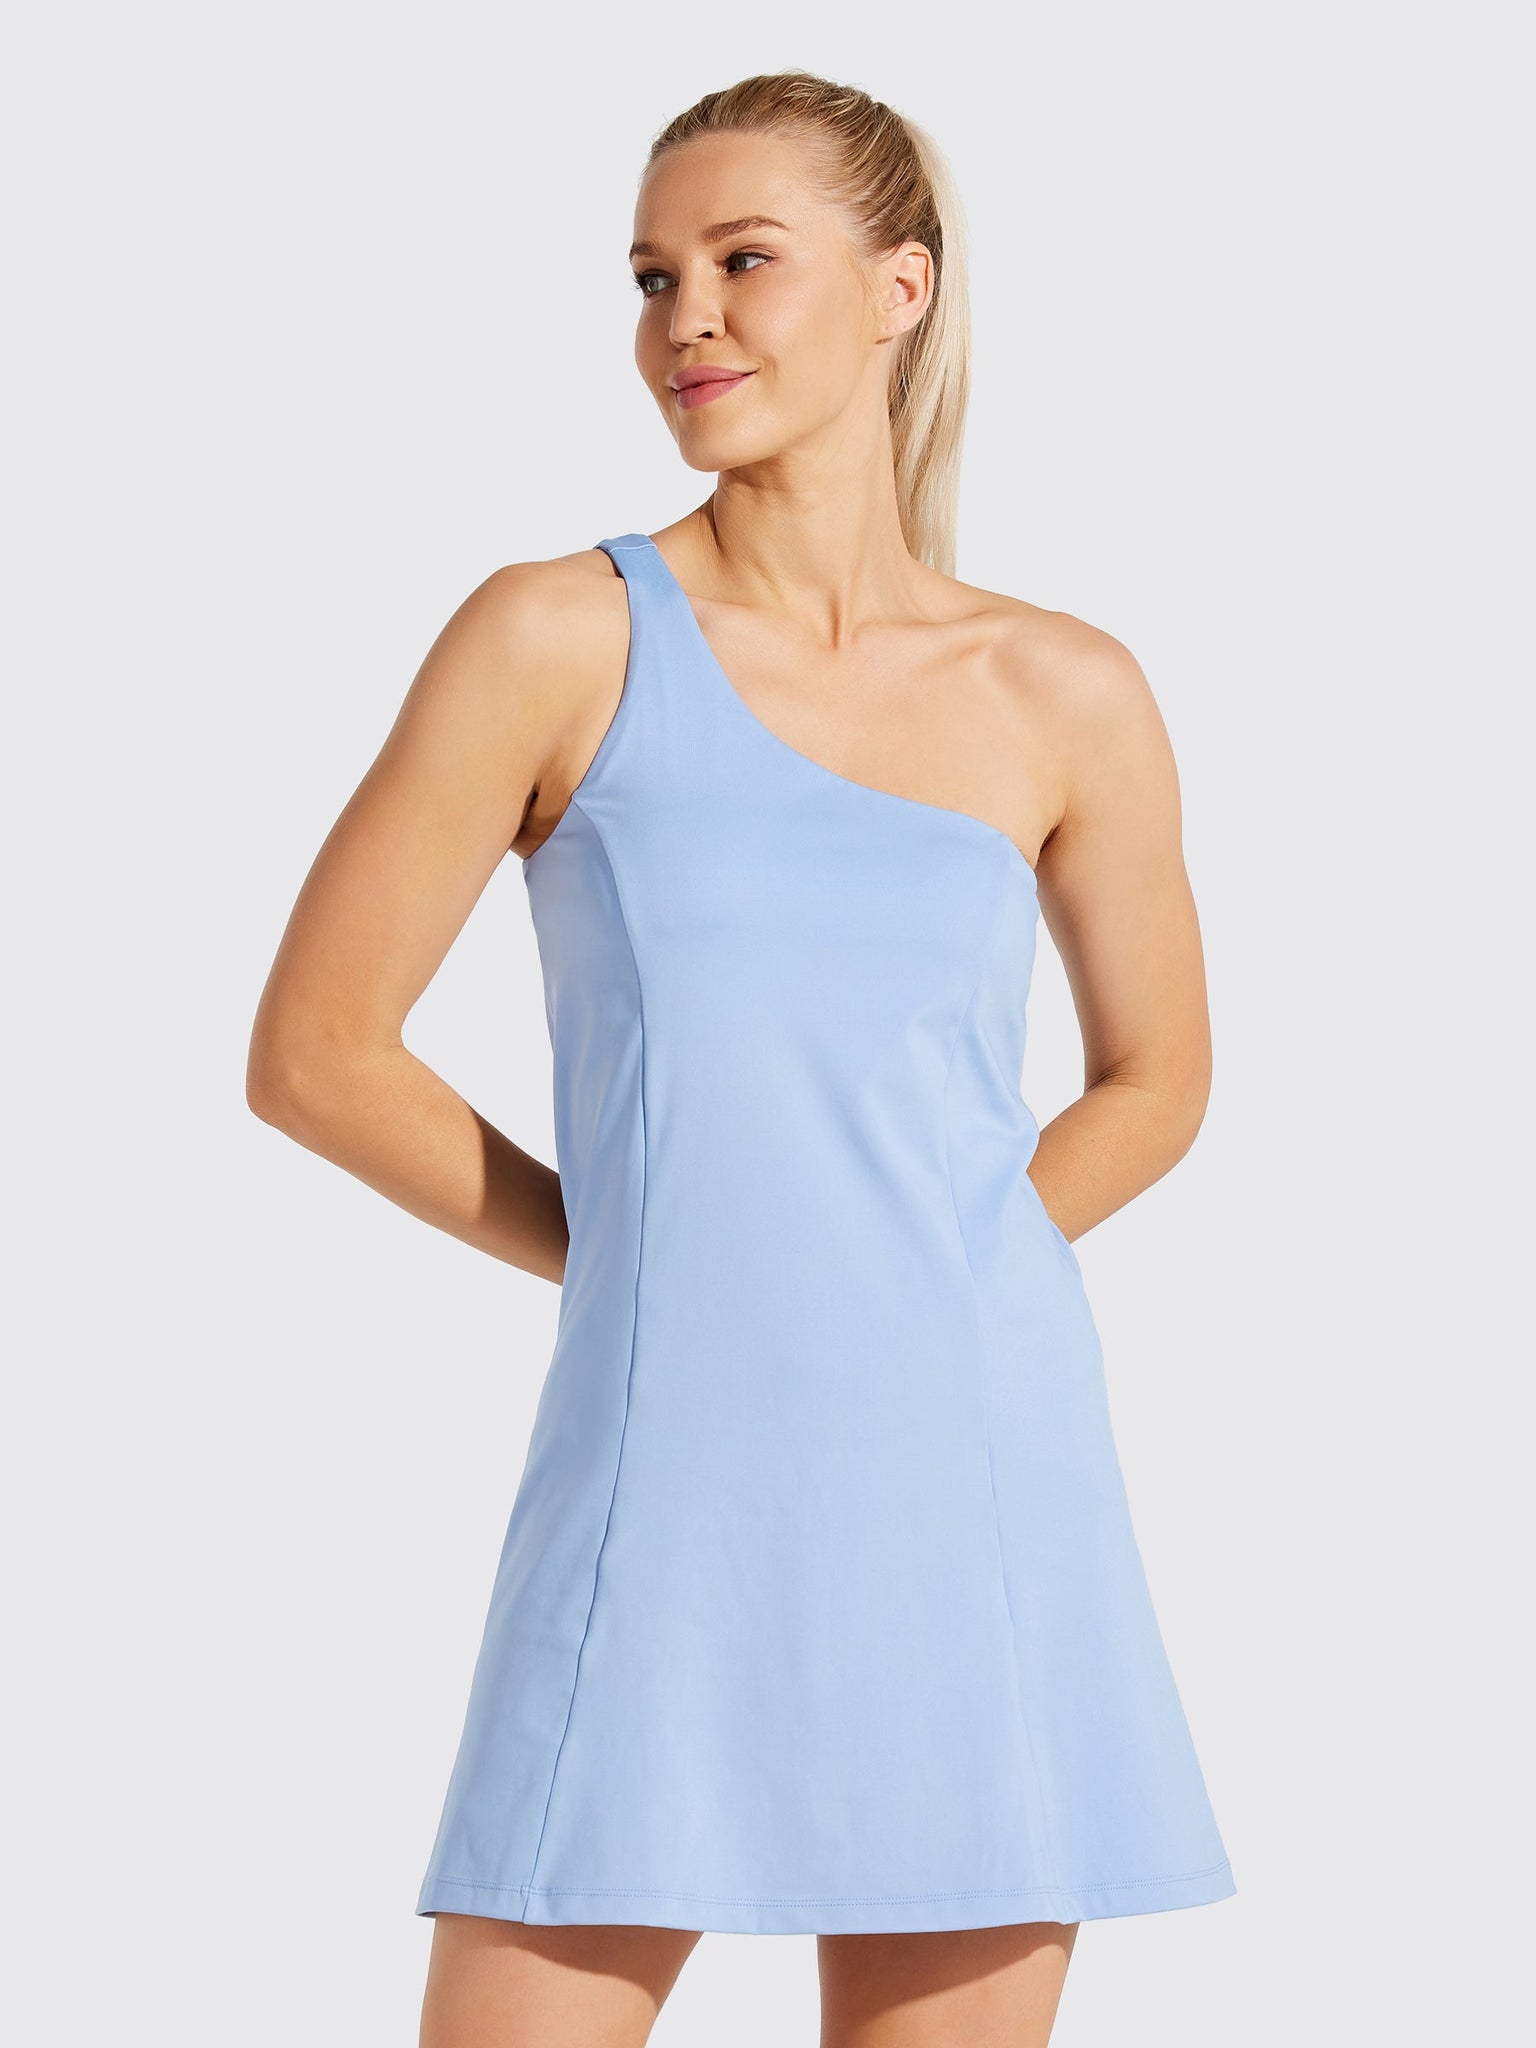 Willit Women's One Shoulder Dress_Blue2